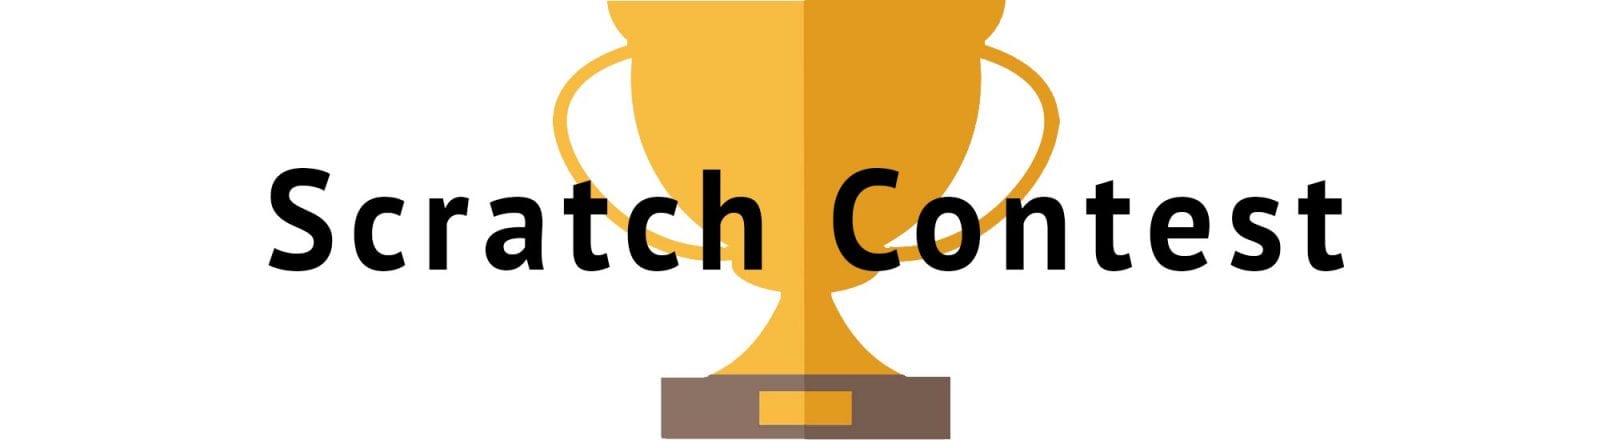 Scratch Contest Logo